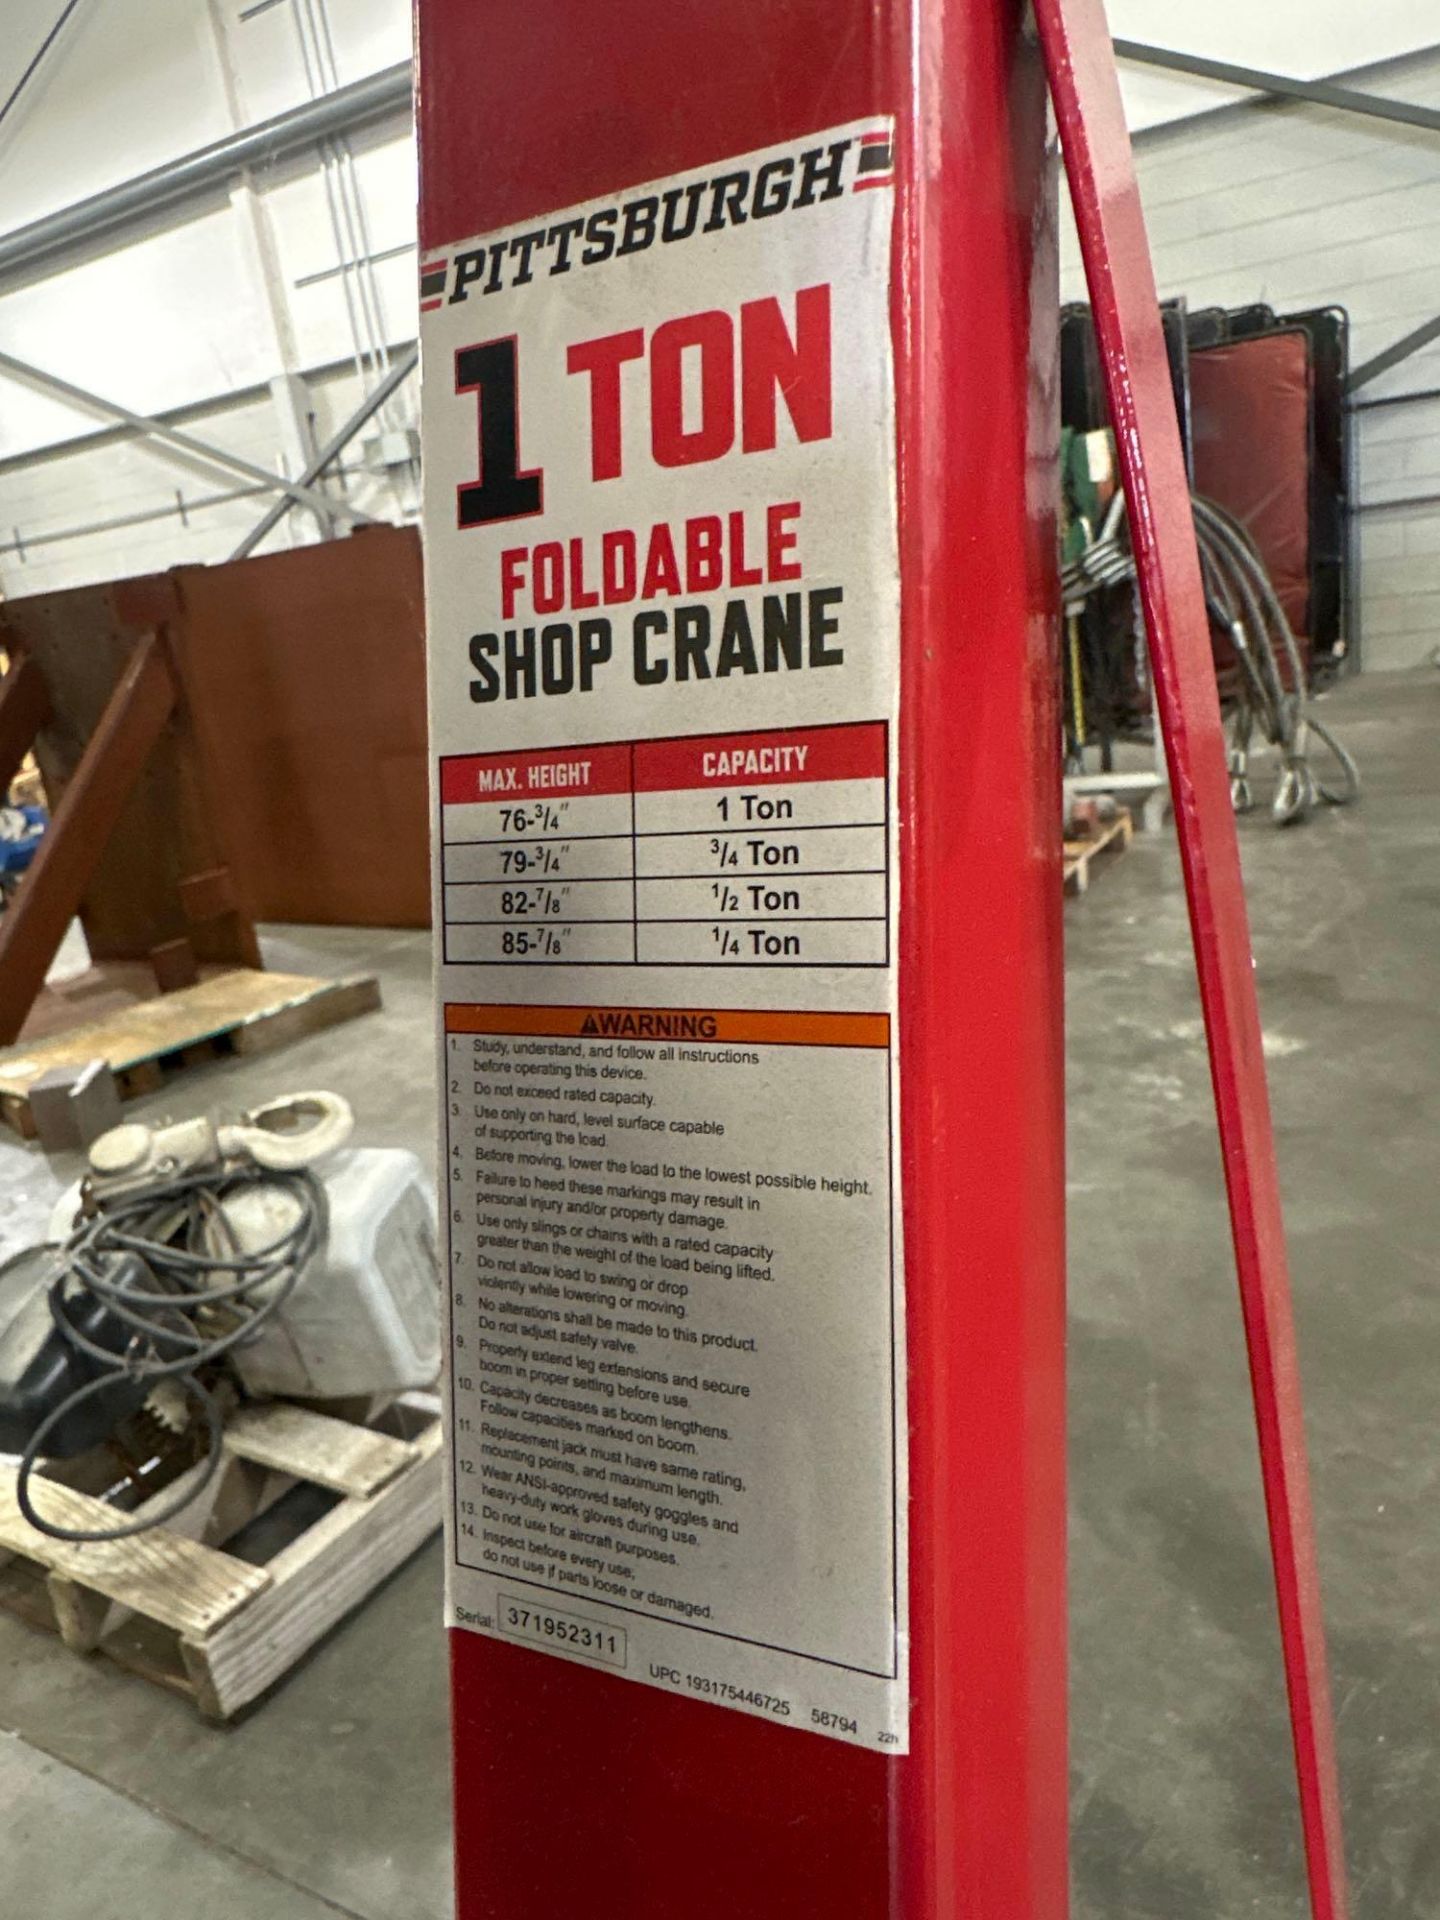 1 Ton Pittsburgh Foldable Shop Crane - Image 5 of 5